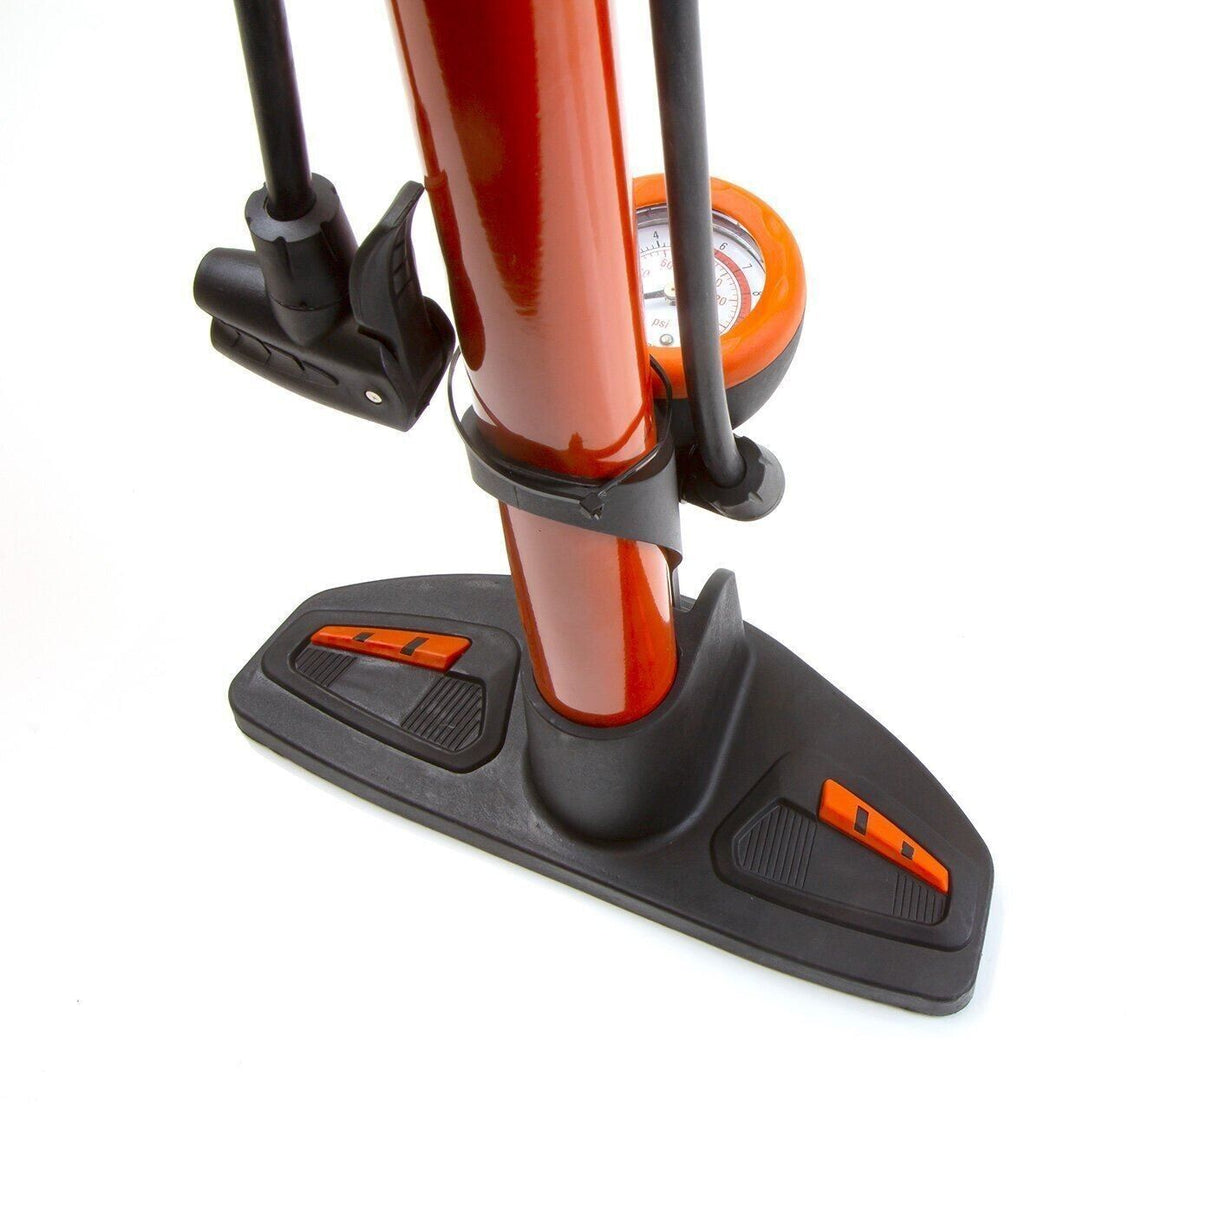 Clarks Bicycle Track Pump With Pressure Gauge - Orange - Alloy Body - Dual Head - Sportandleisure.com